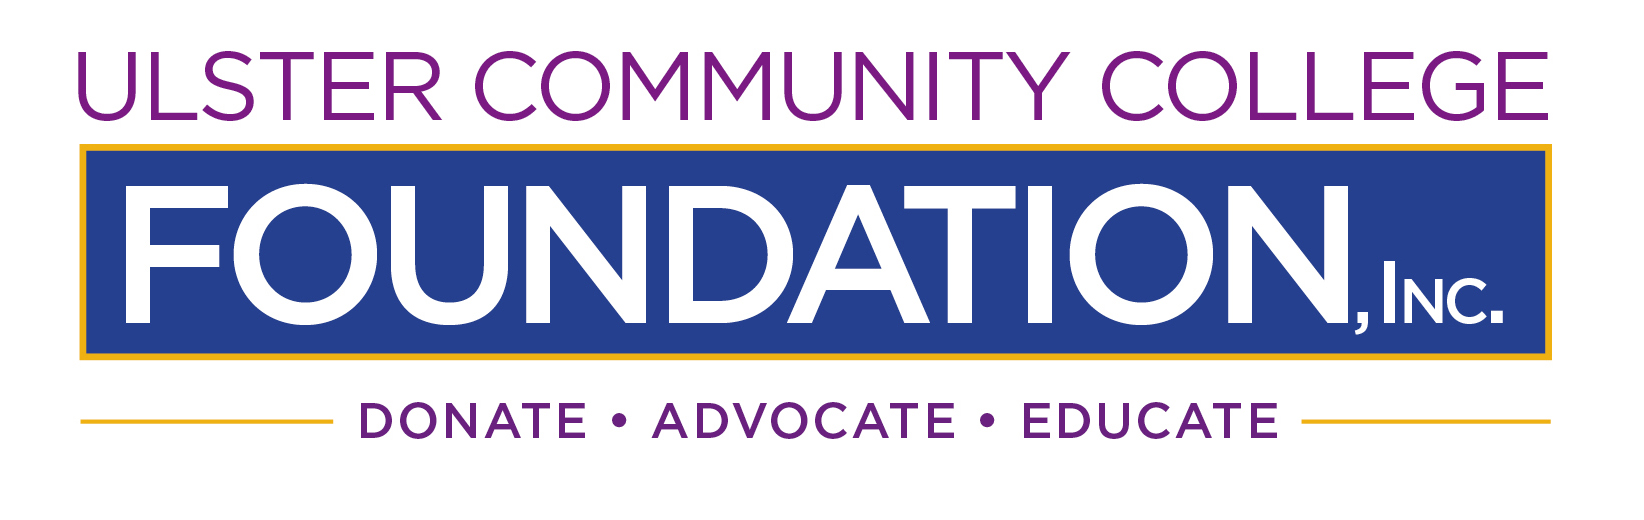 Ulster Community College Foundation logo